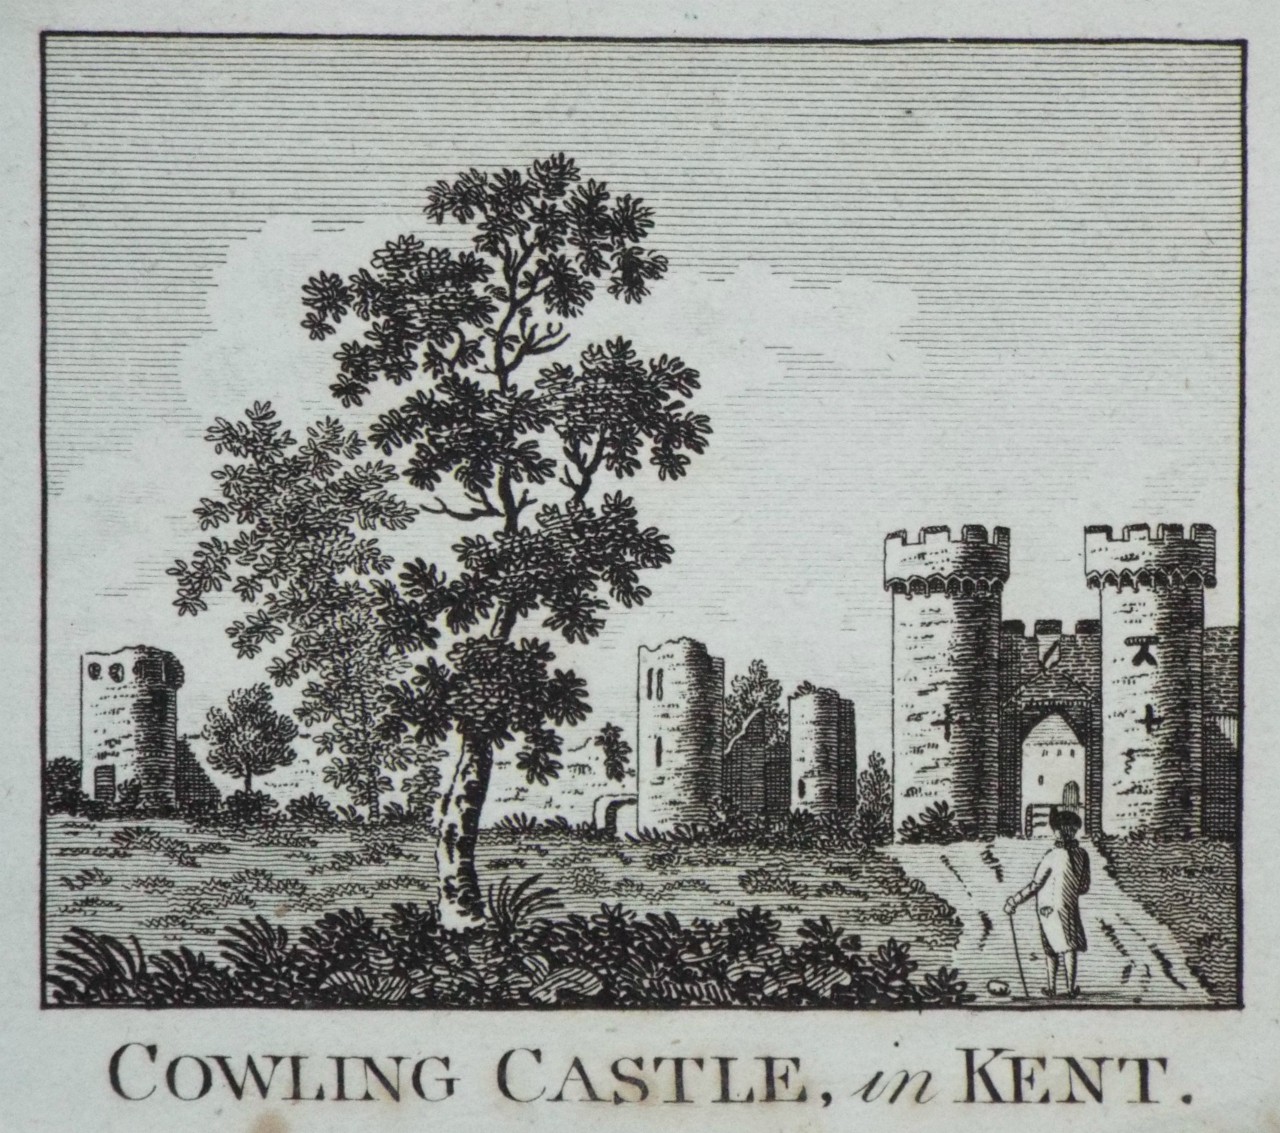 Print - Cowling Castle, in Kent.